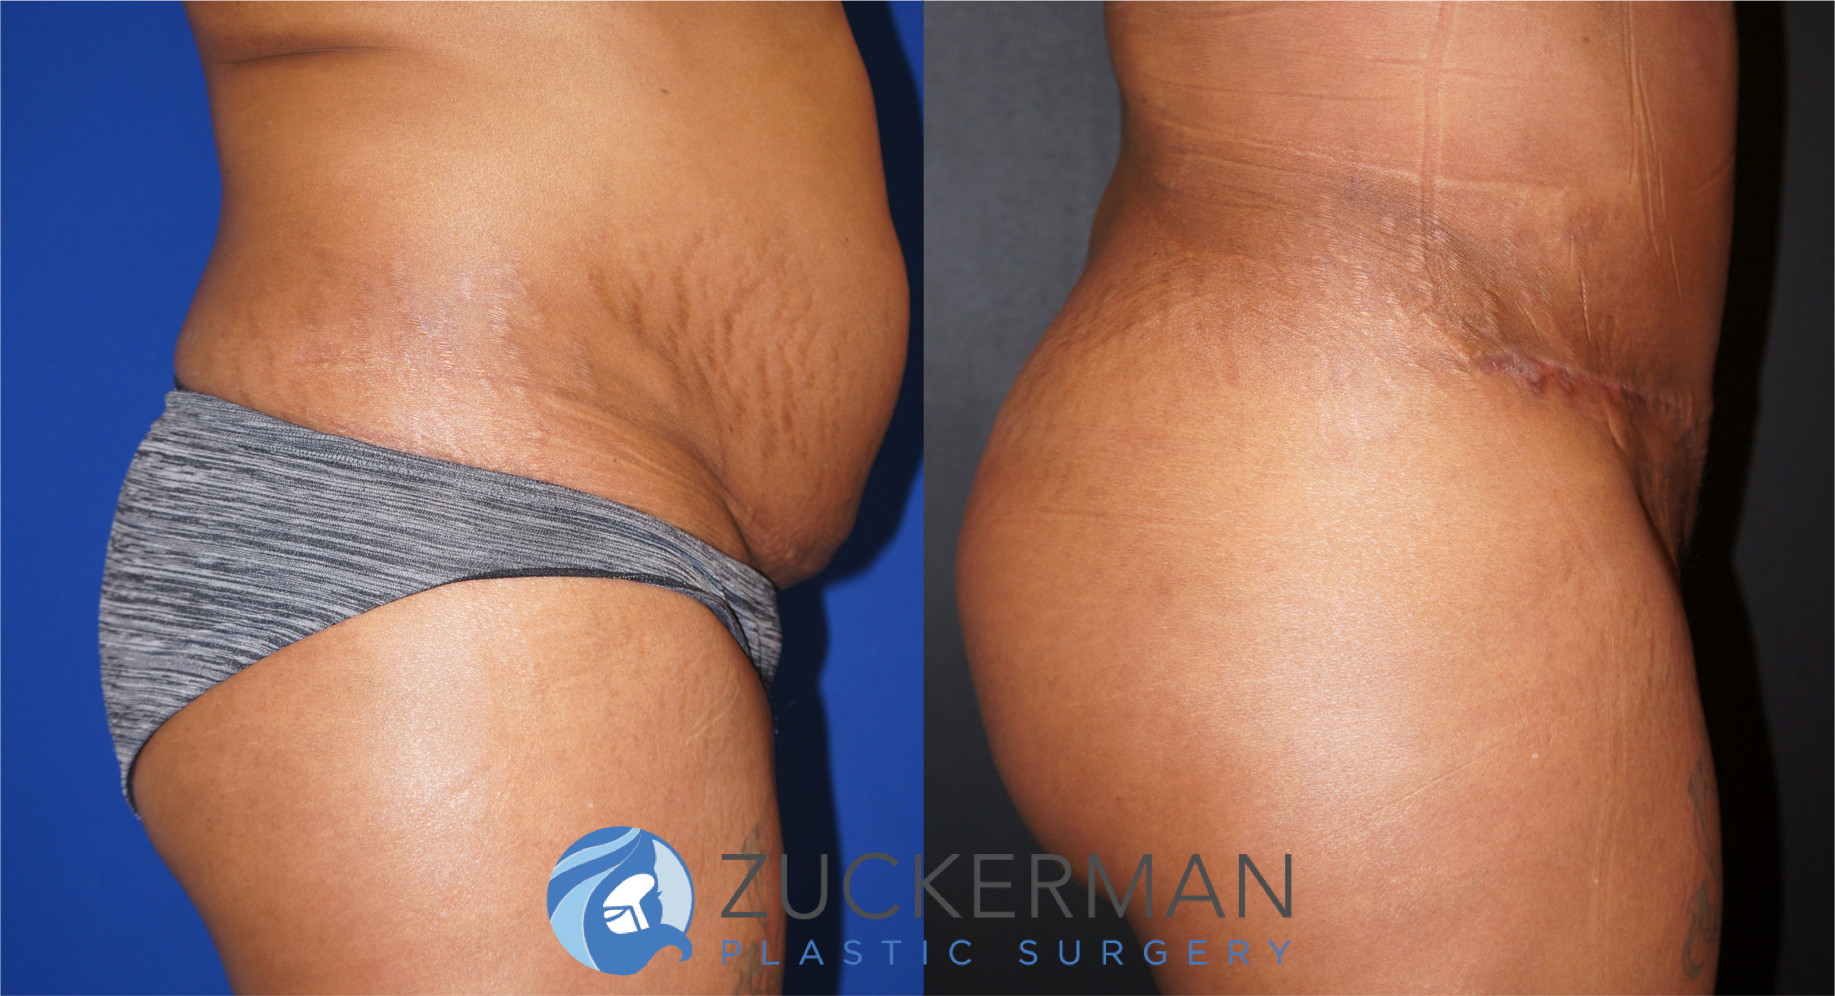 brazilian butt lift, bbl, buttock augmentation, 7, before and after, joshua zuckerman, right profile view